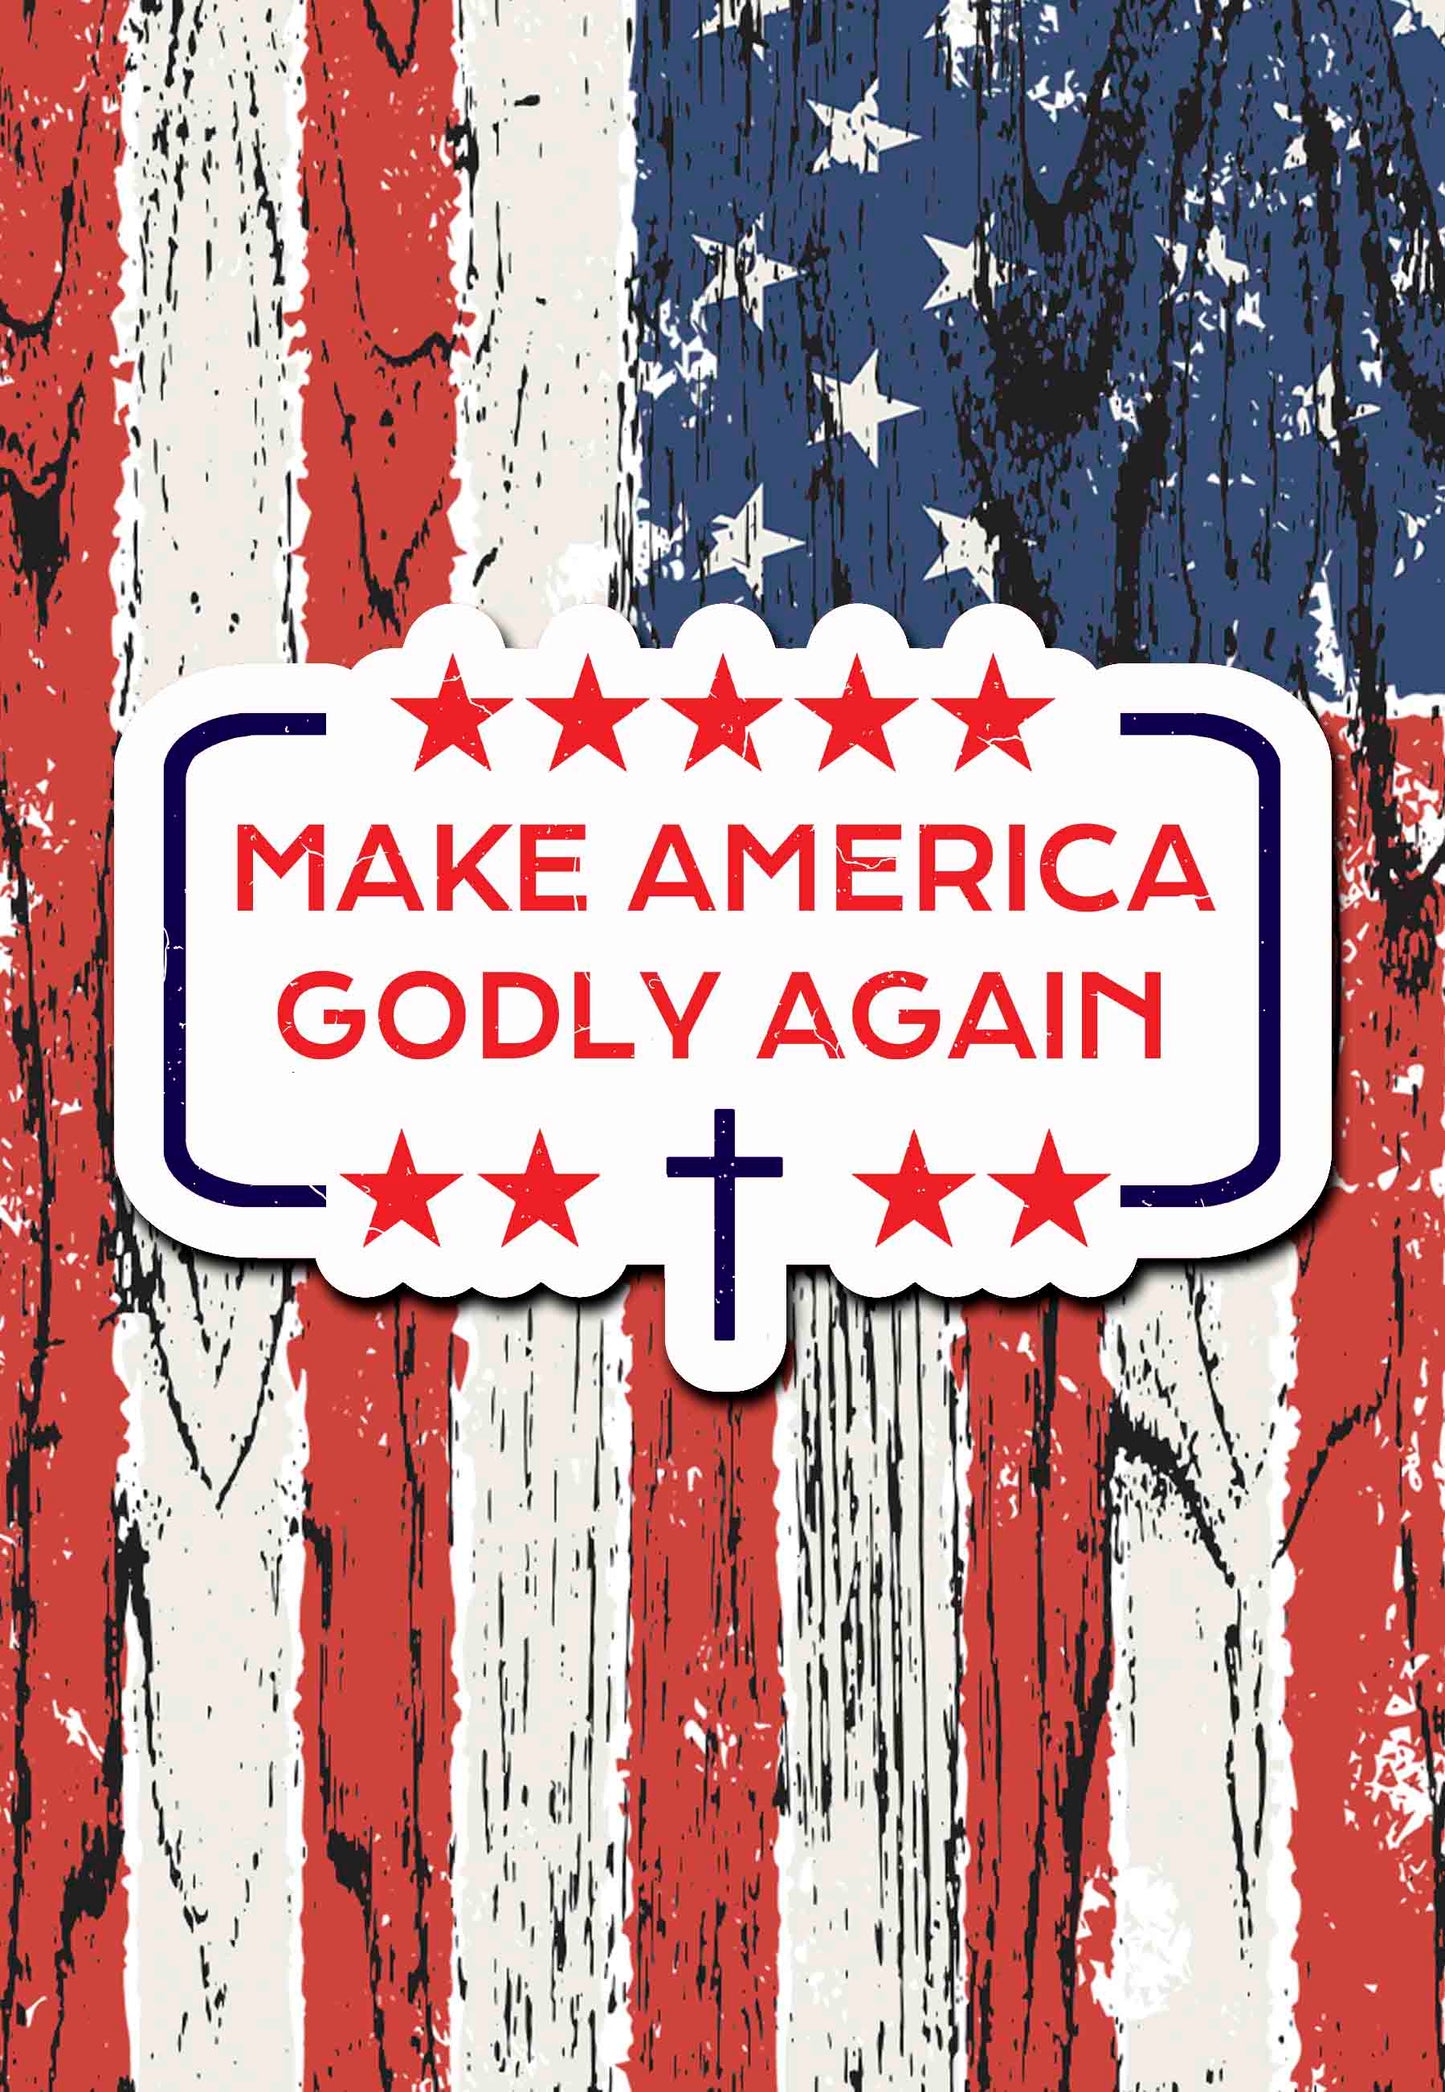 Make America Godly Again sticker on displauy